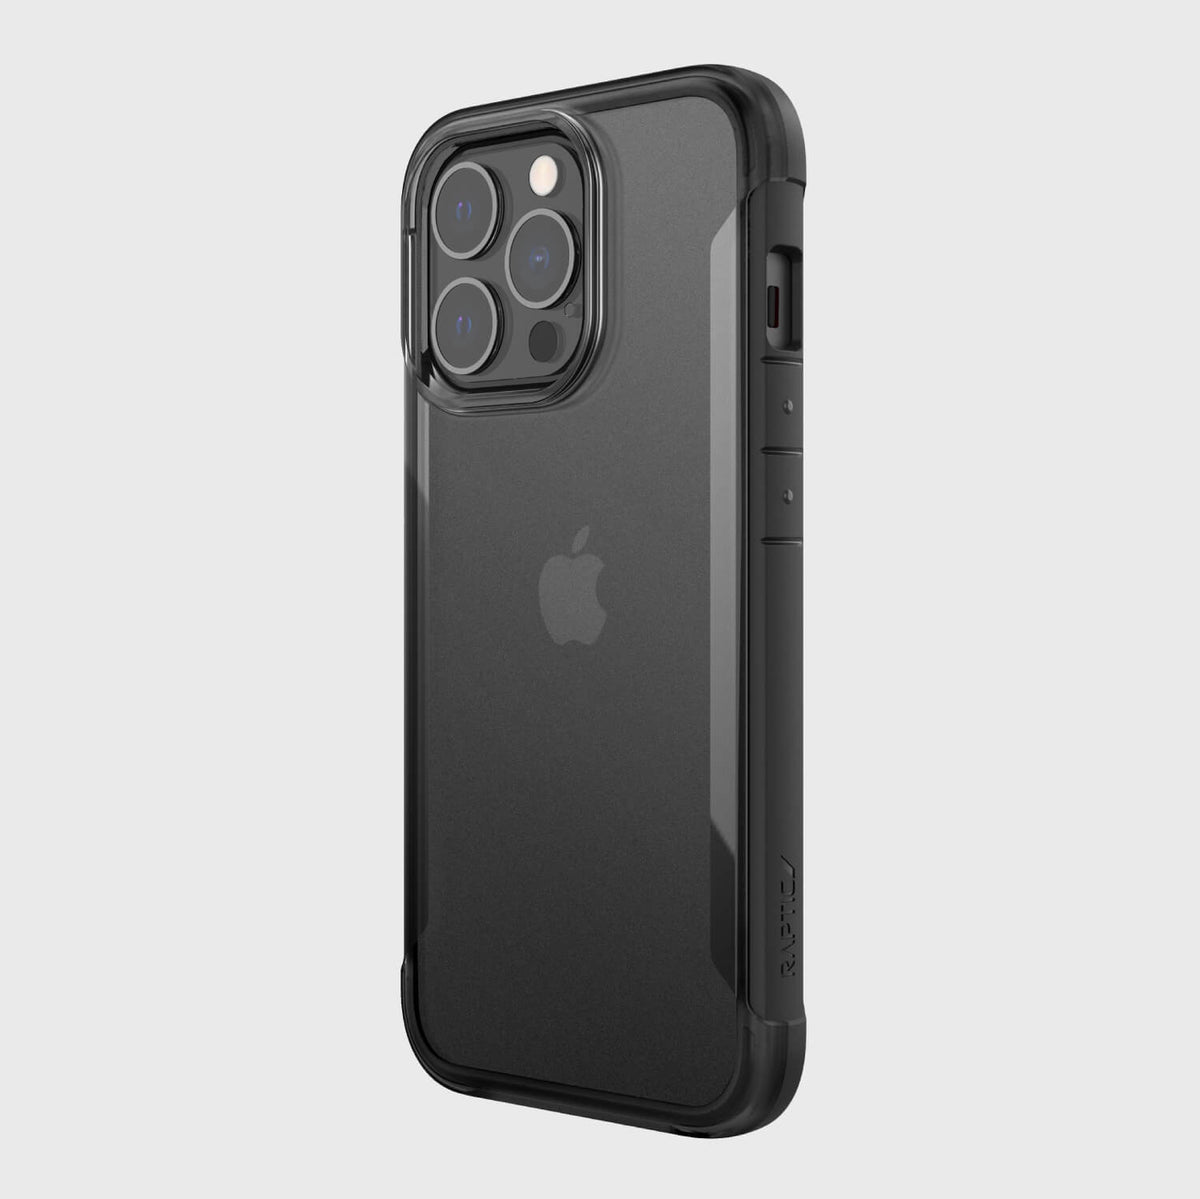 Showing an iPhone 13 Pro in a black Raptic Terrain case